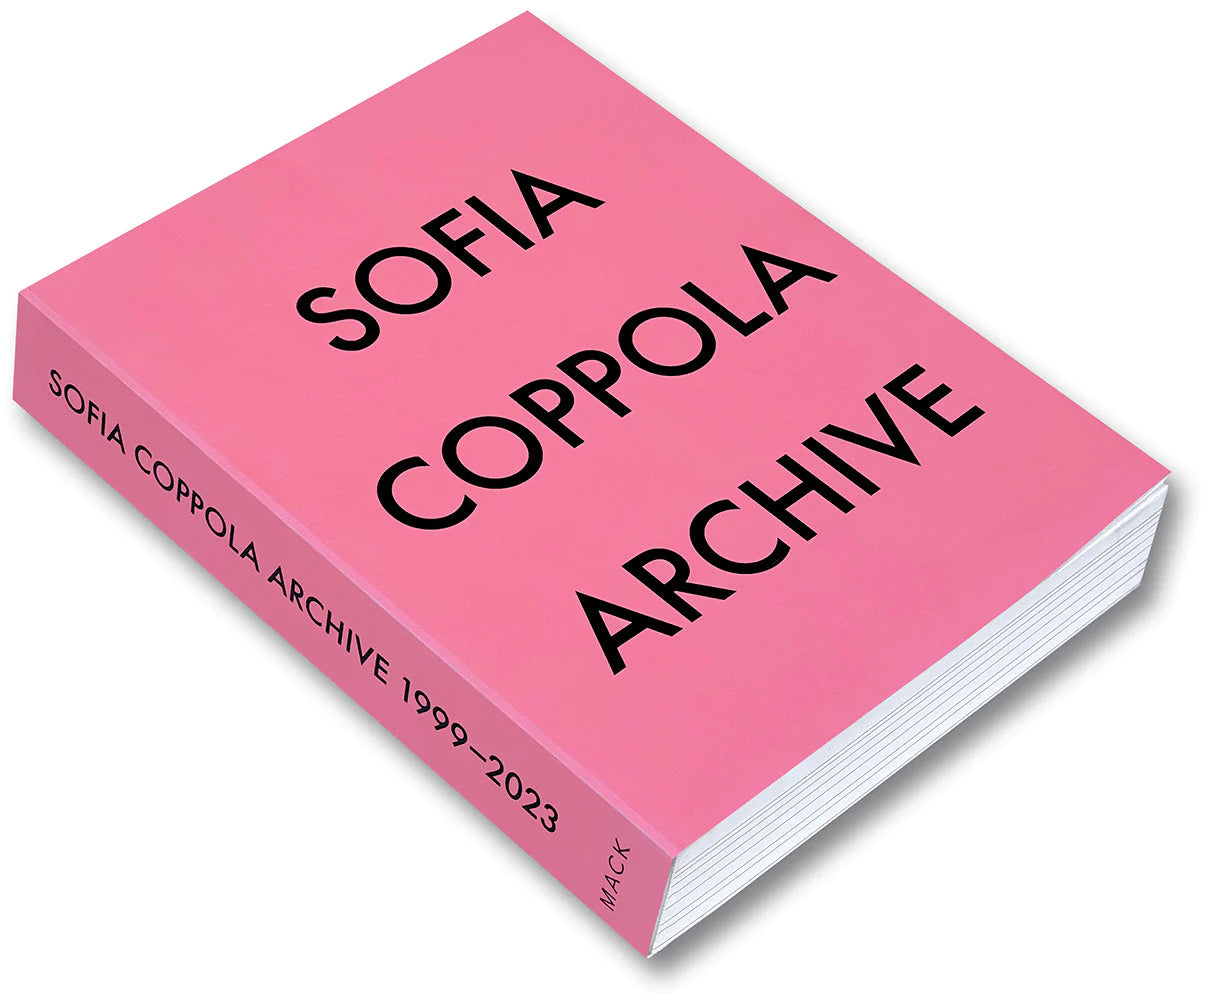 SOFIA COPPOLA- ARCHIVE 1999-2023 – Academy Museum Store